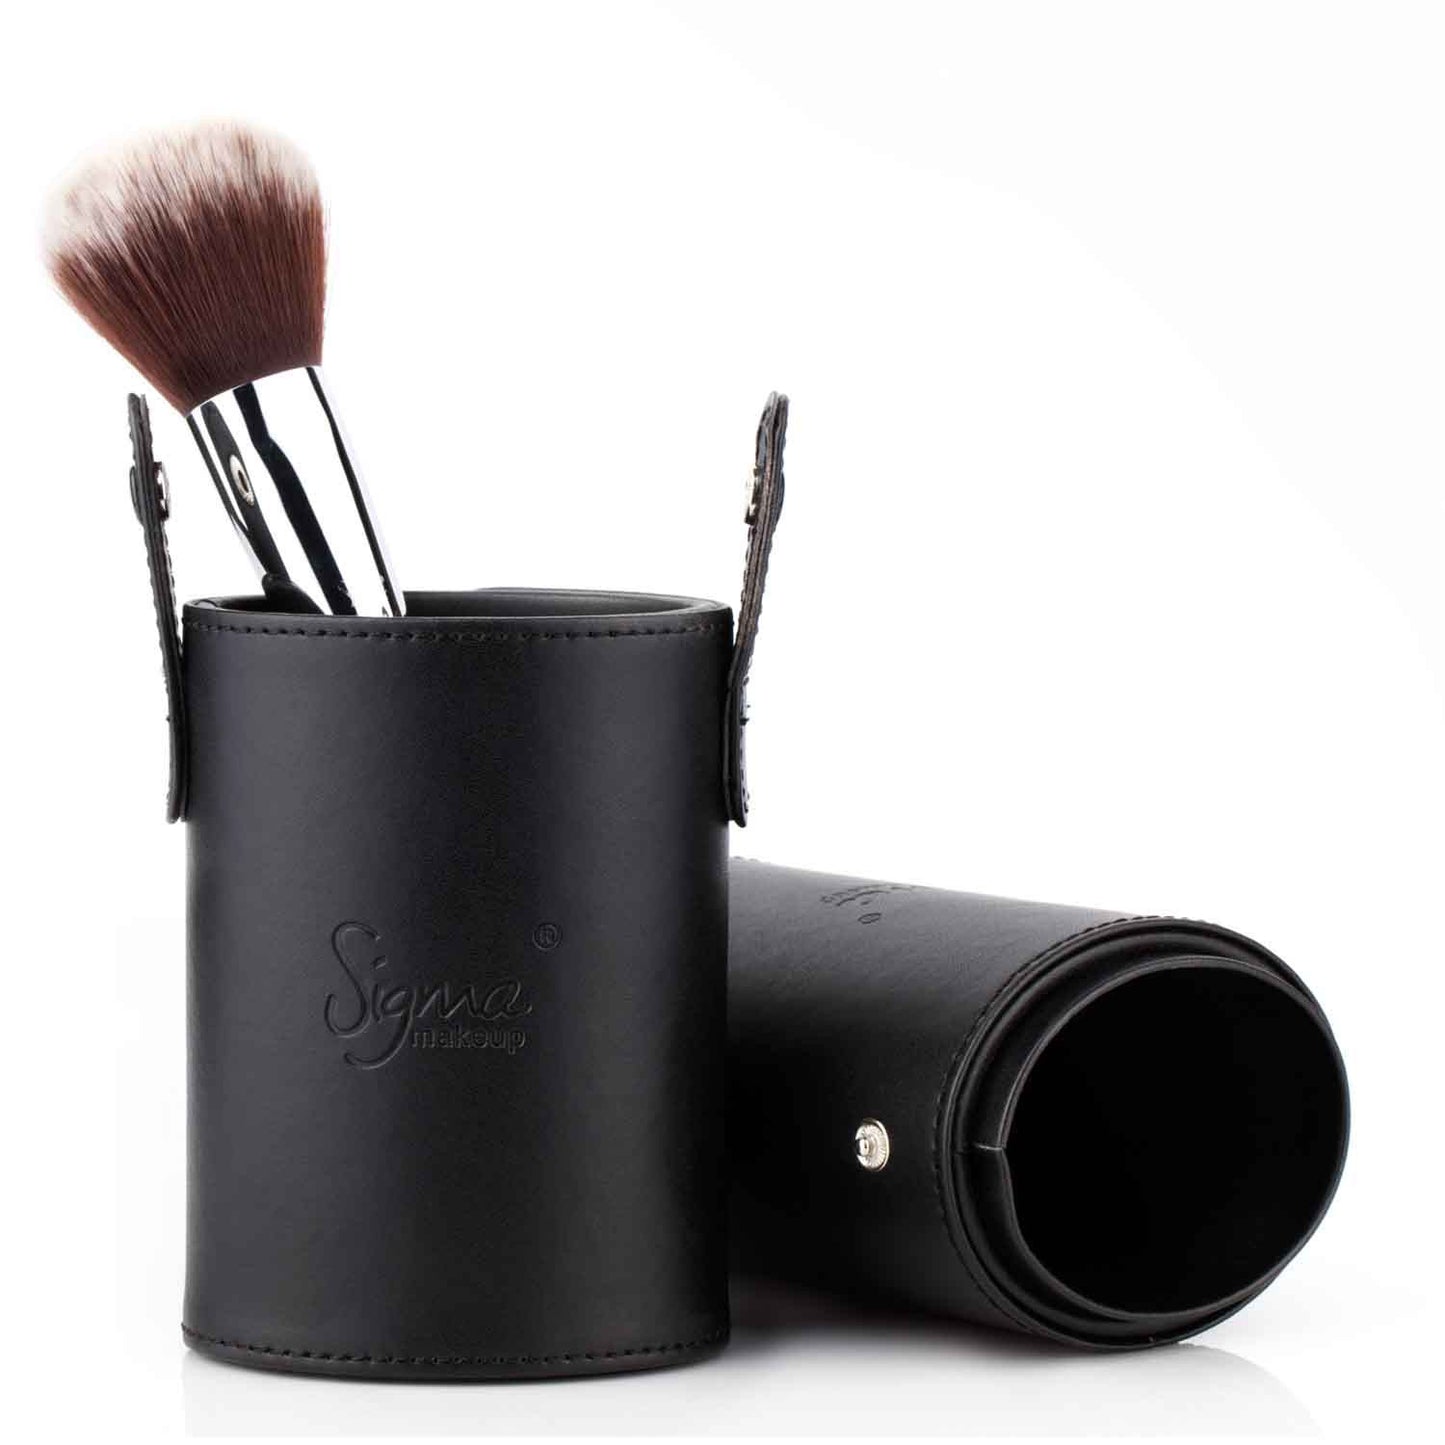 Sigma Mr Bunny Black Travel Kit 7 Brushes